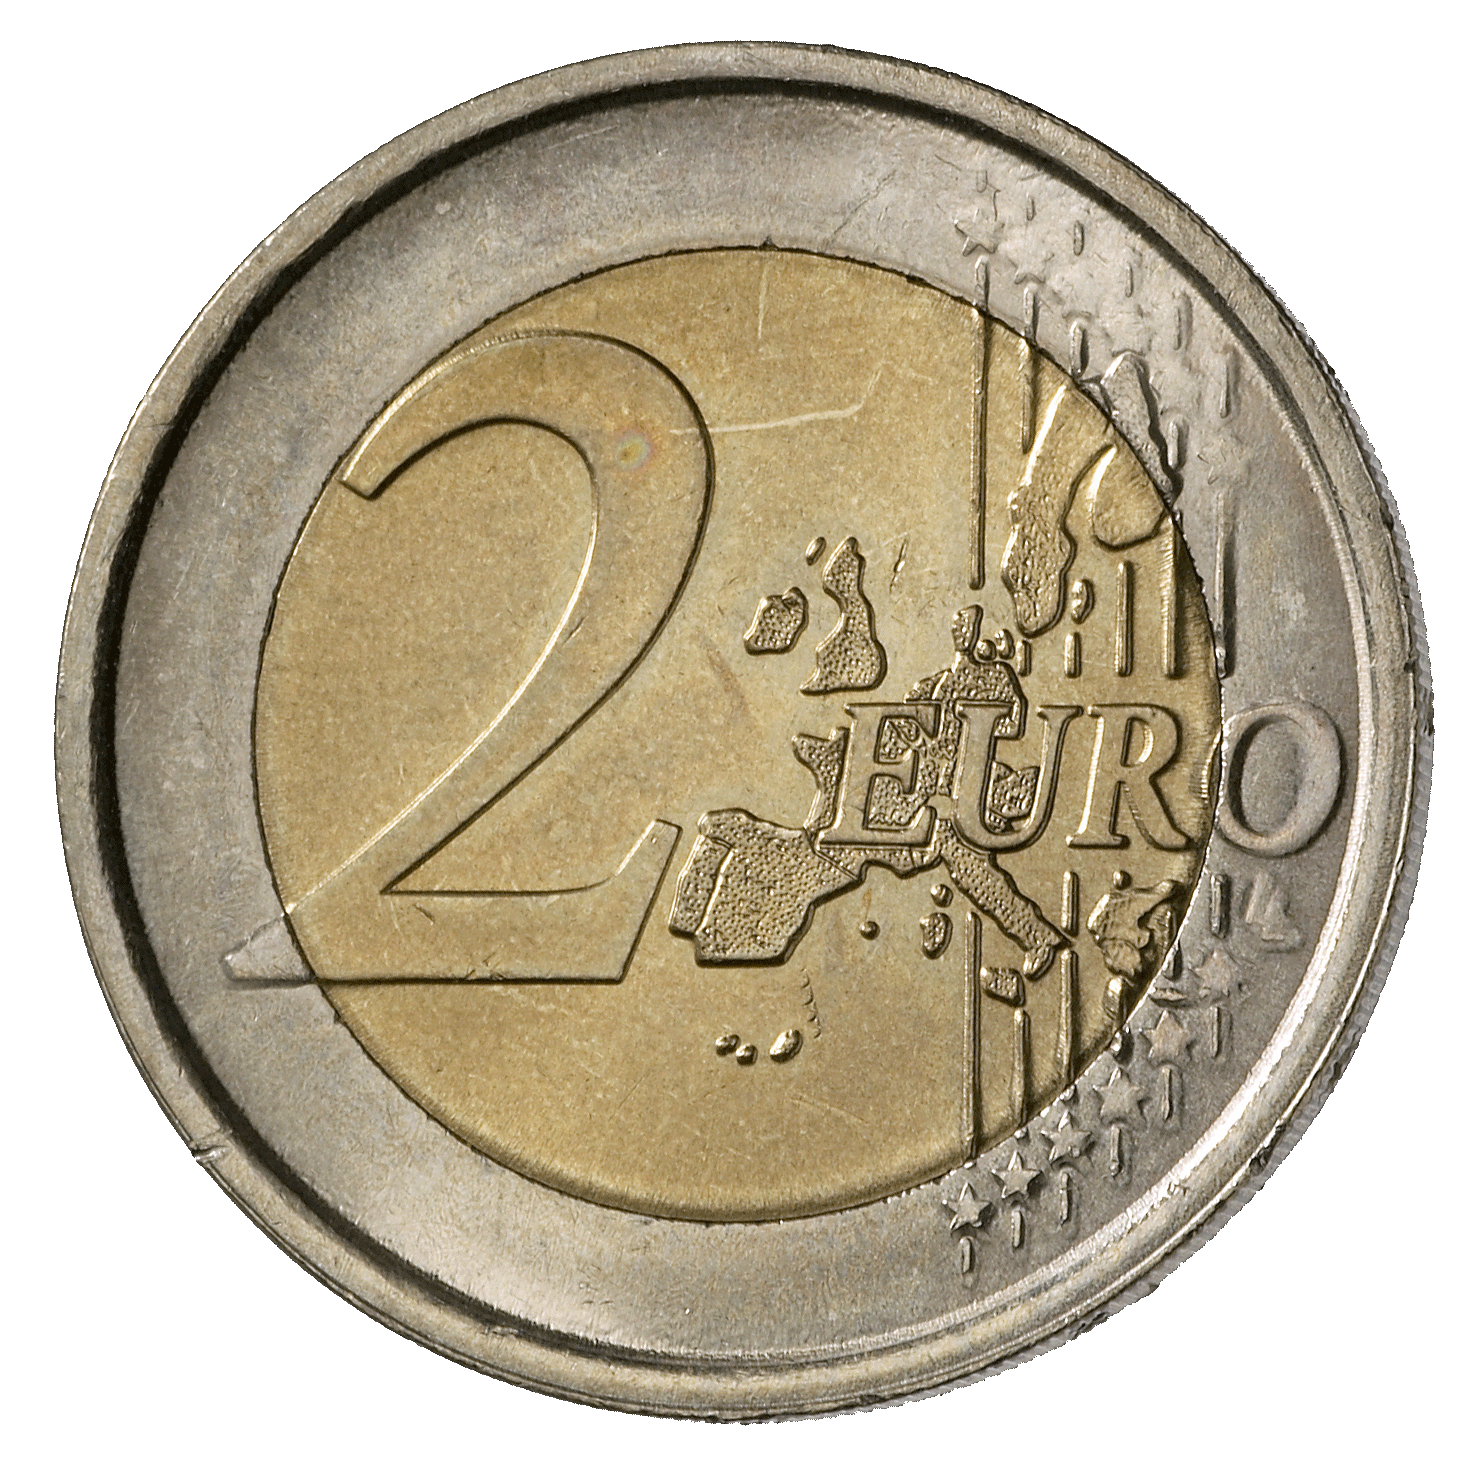 Republic of Italy, 2 Euro 2002 (reverse)